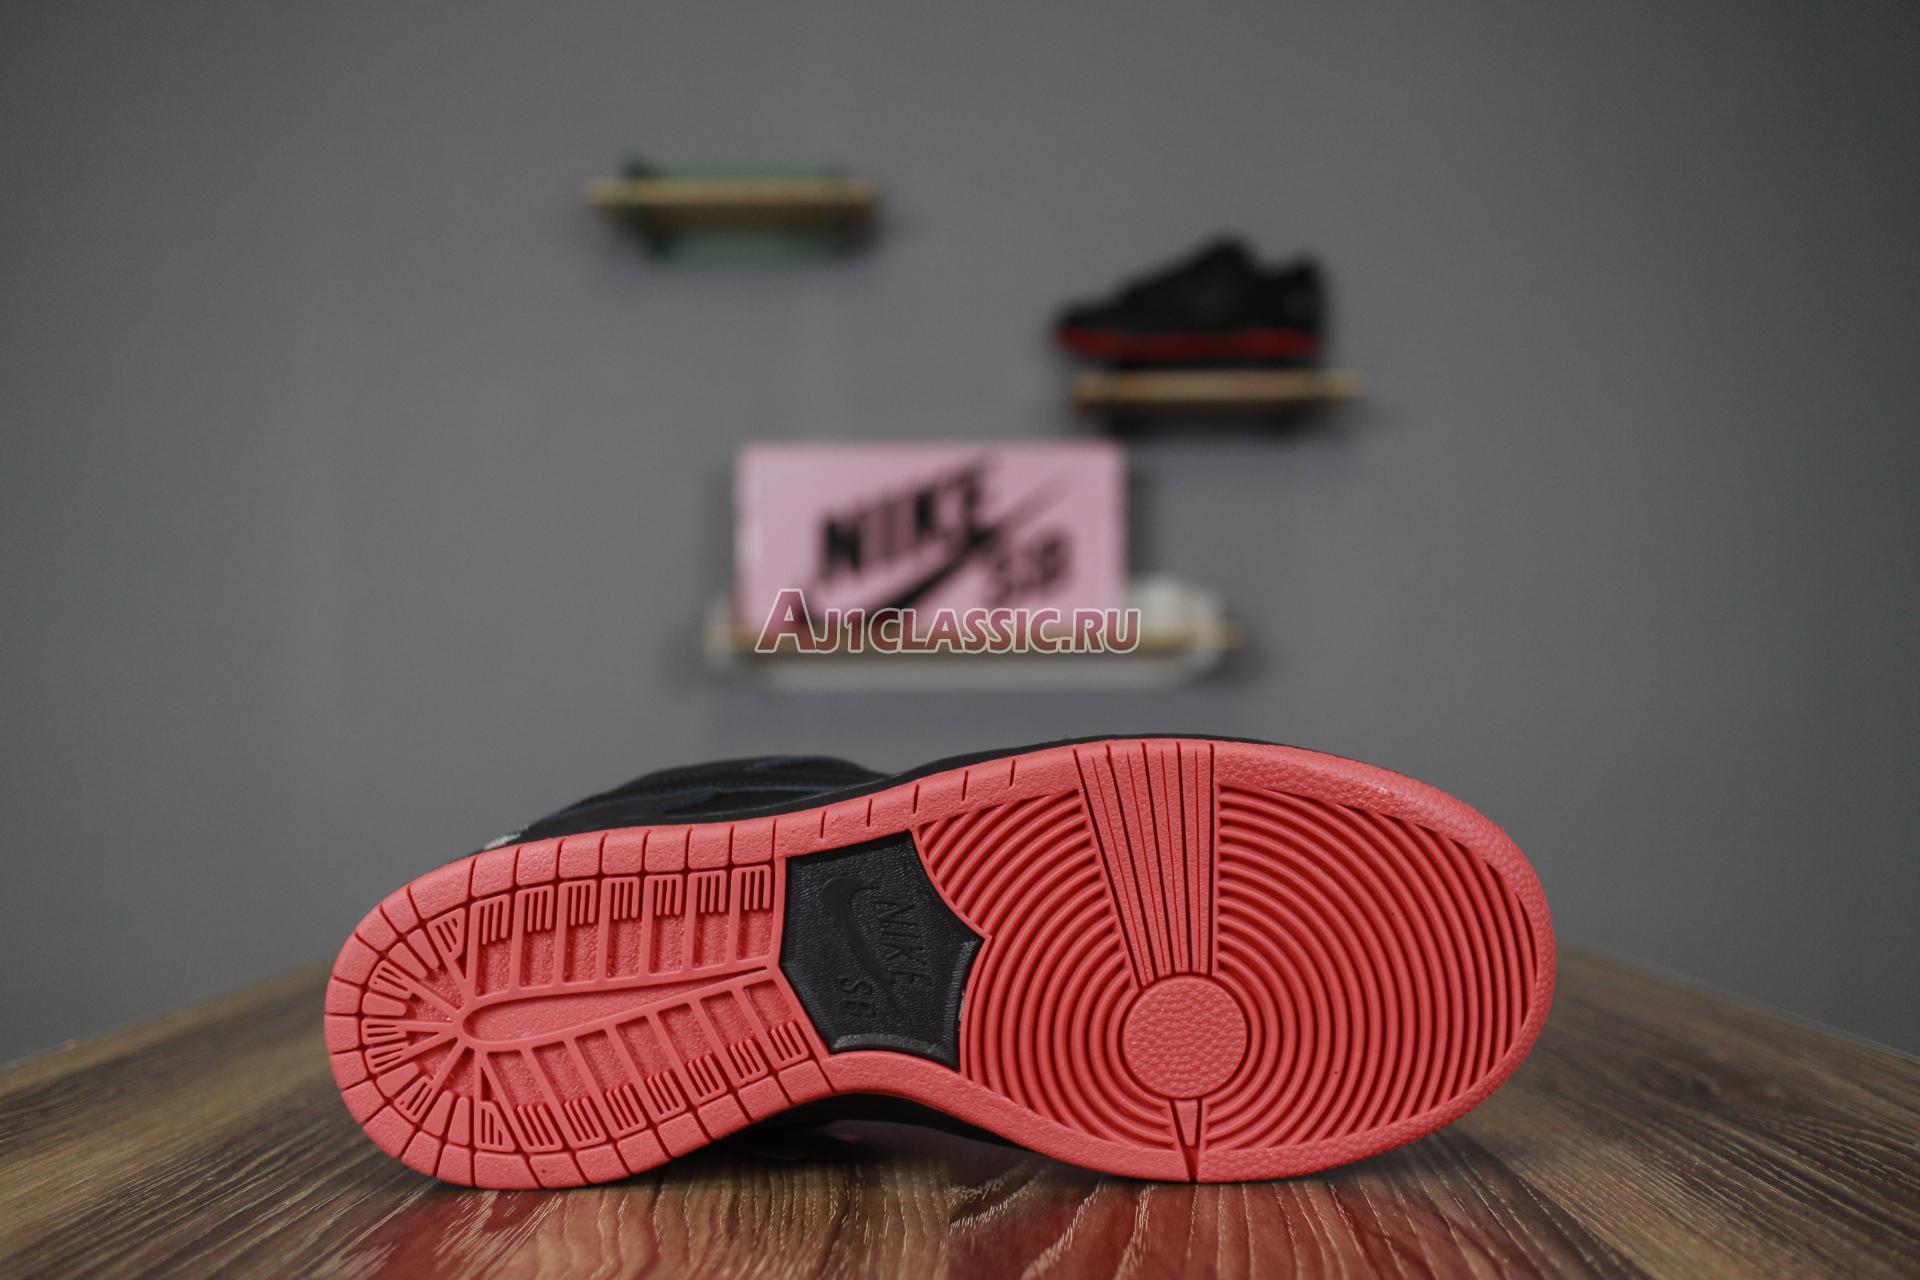 Nike Jeff Staple x Dunk Low Pro SB "Black Pigeon" 883232-008